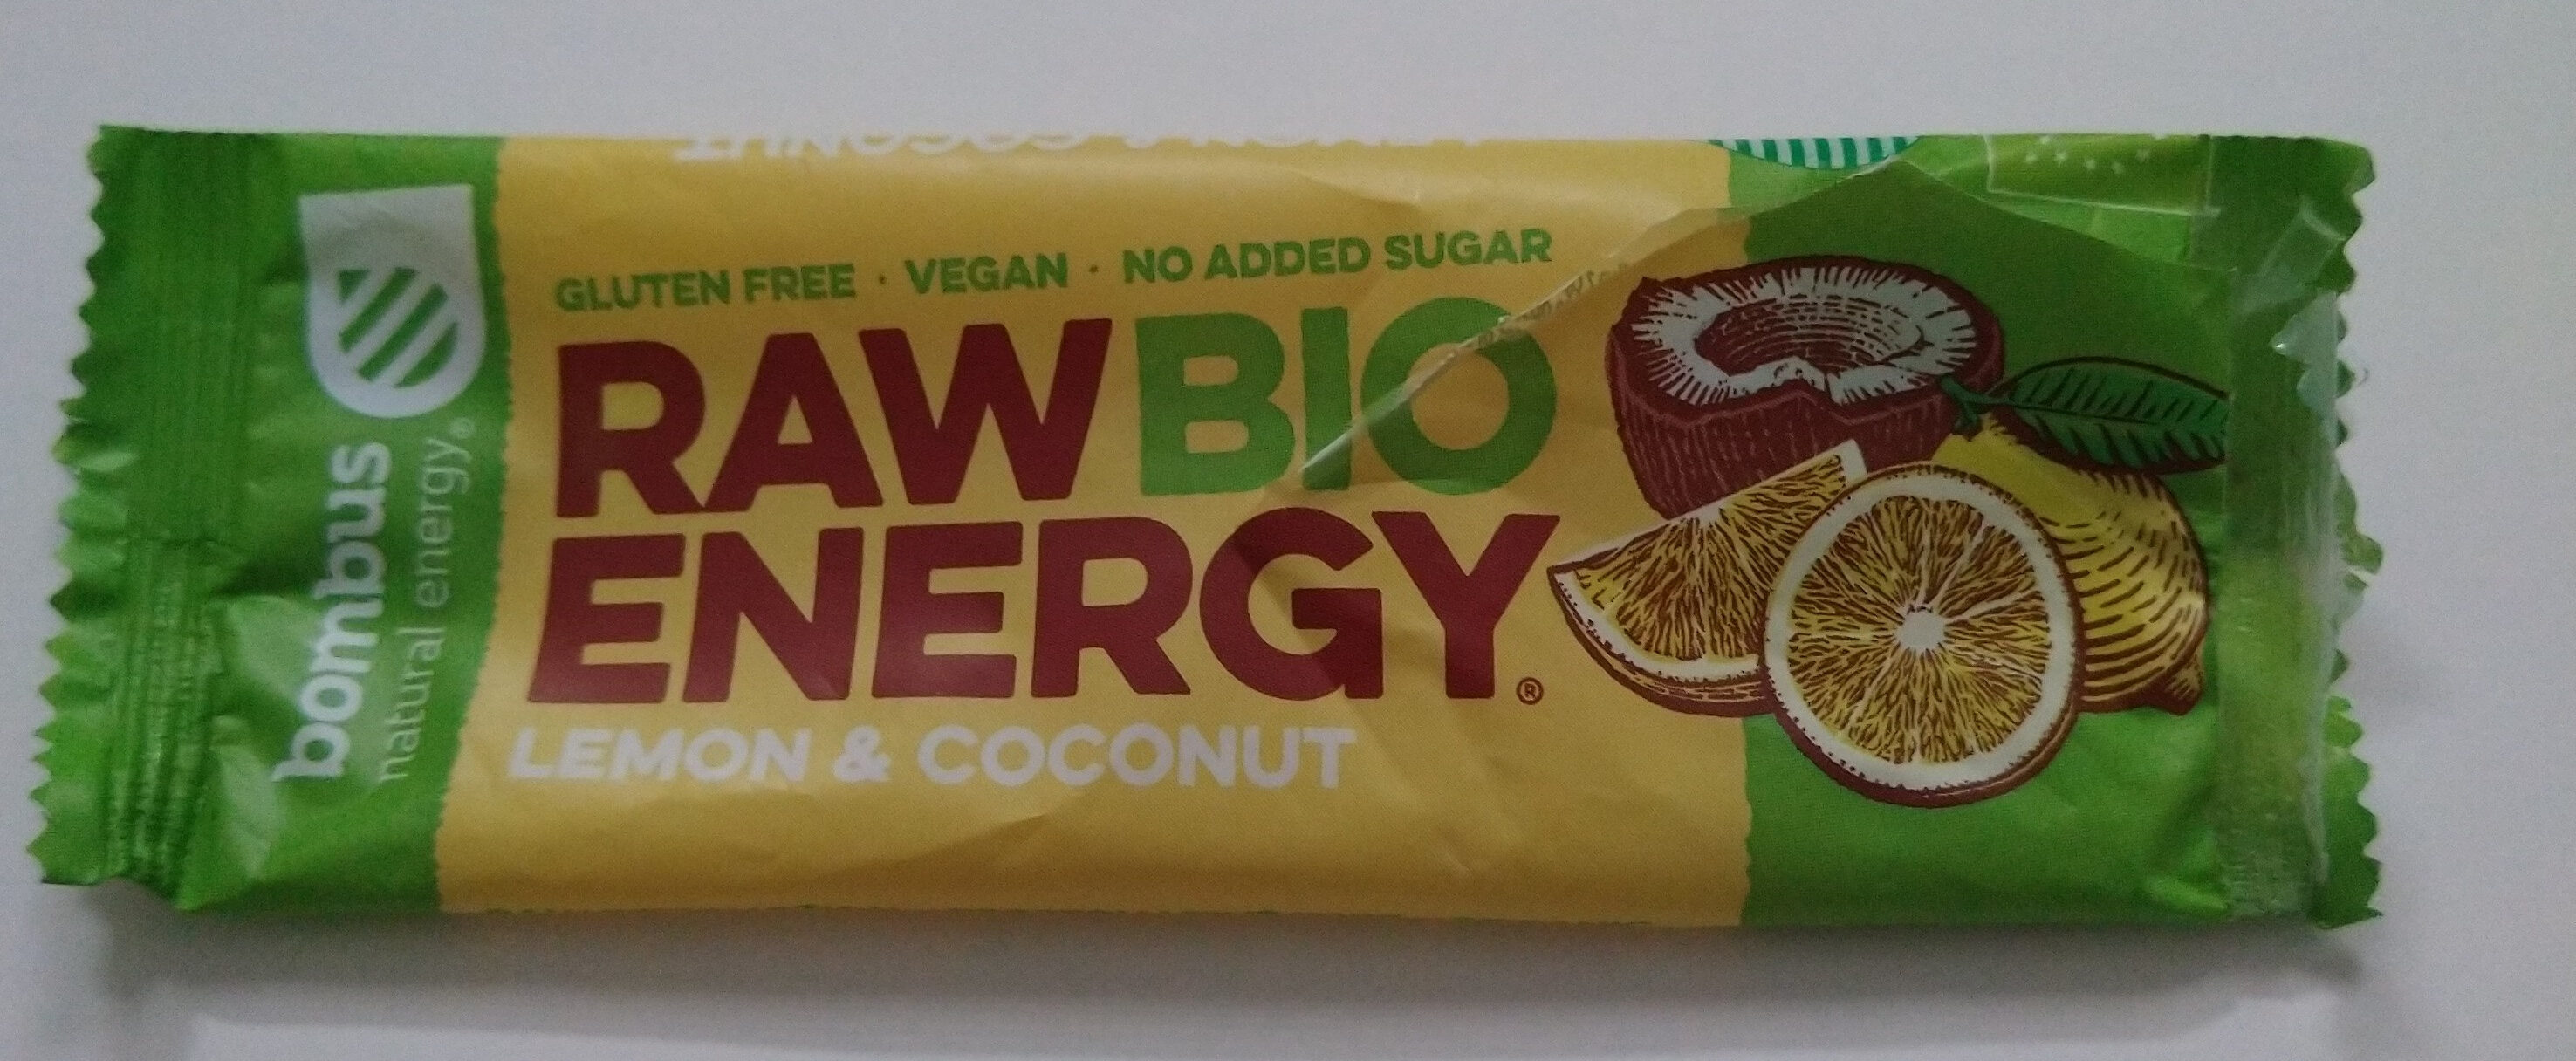 Raw bio energy lemon and coconut - Produkt - pl